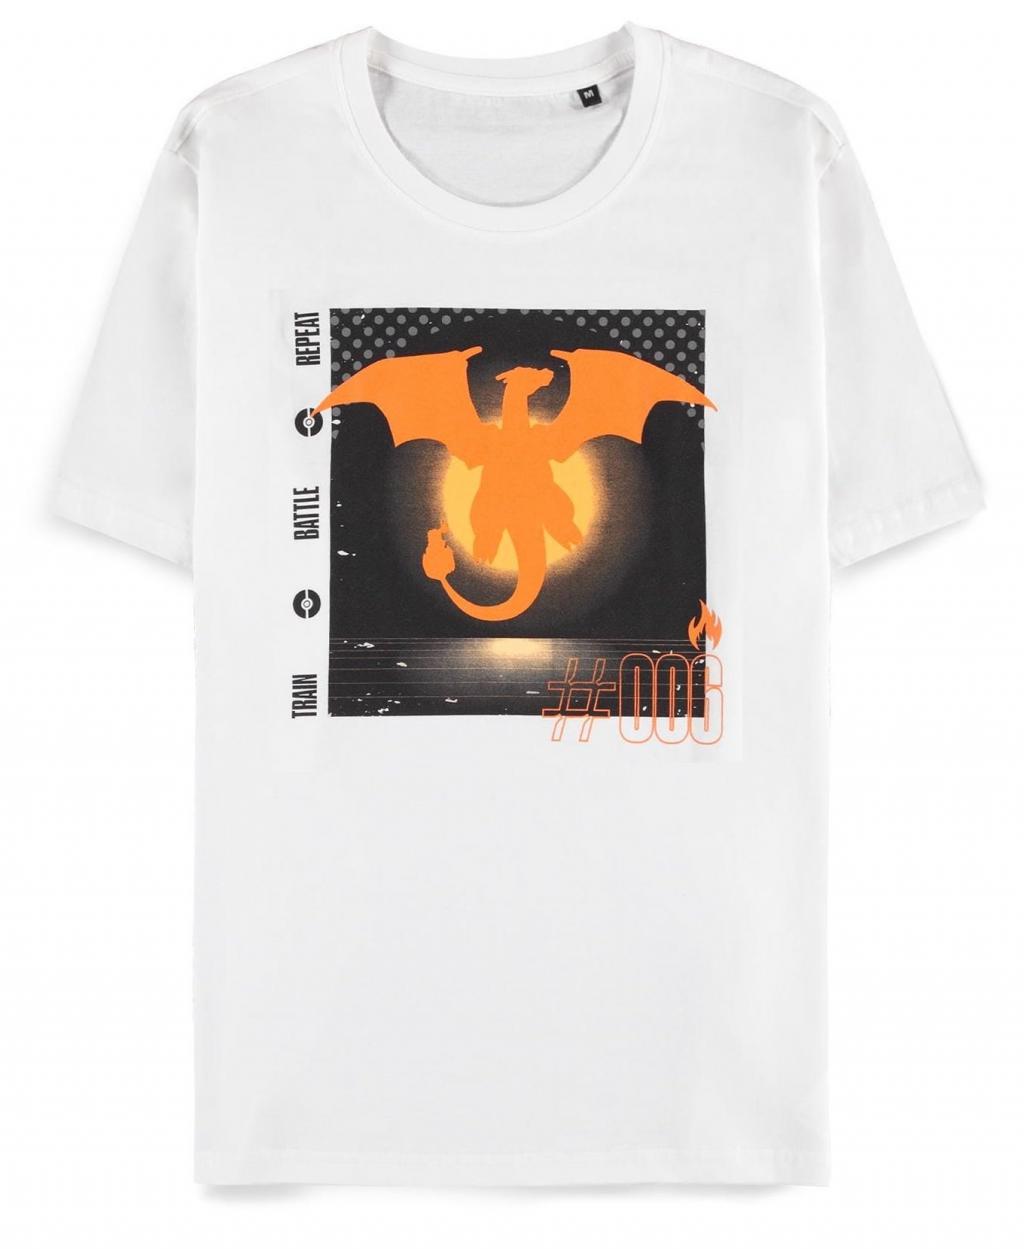 POKEMON - Charizard - Men's T-Shirt (L)